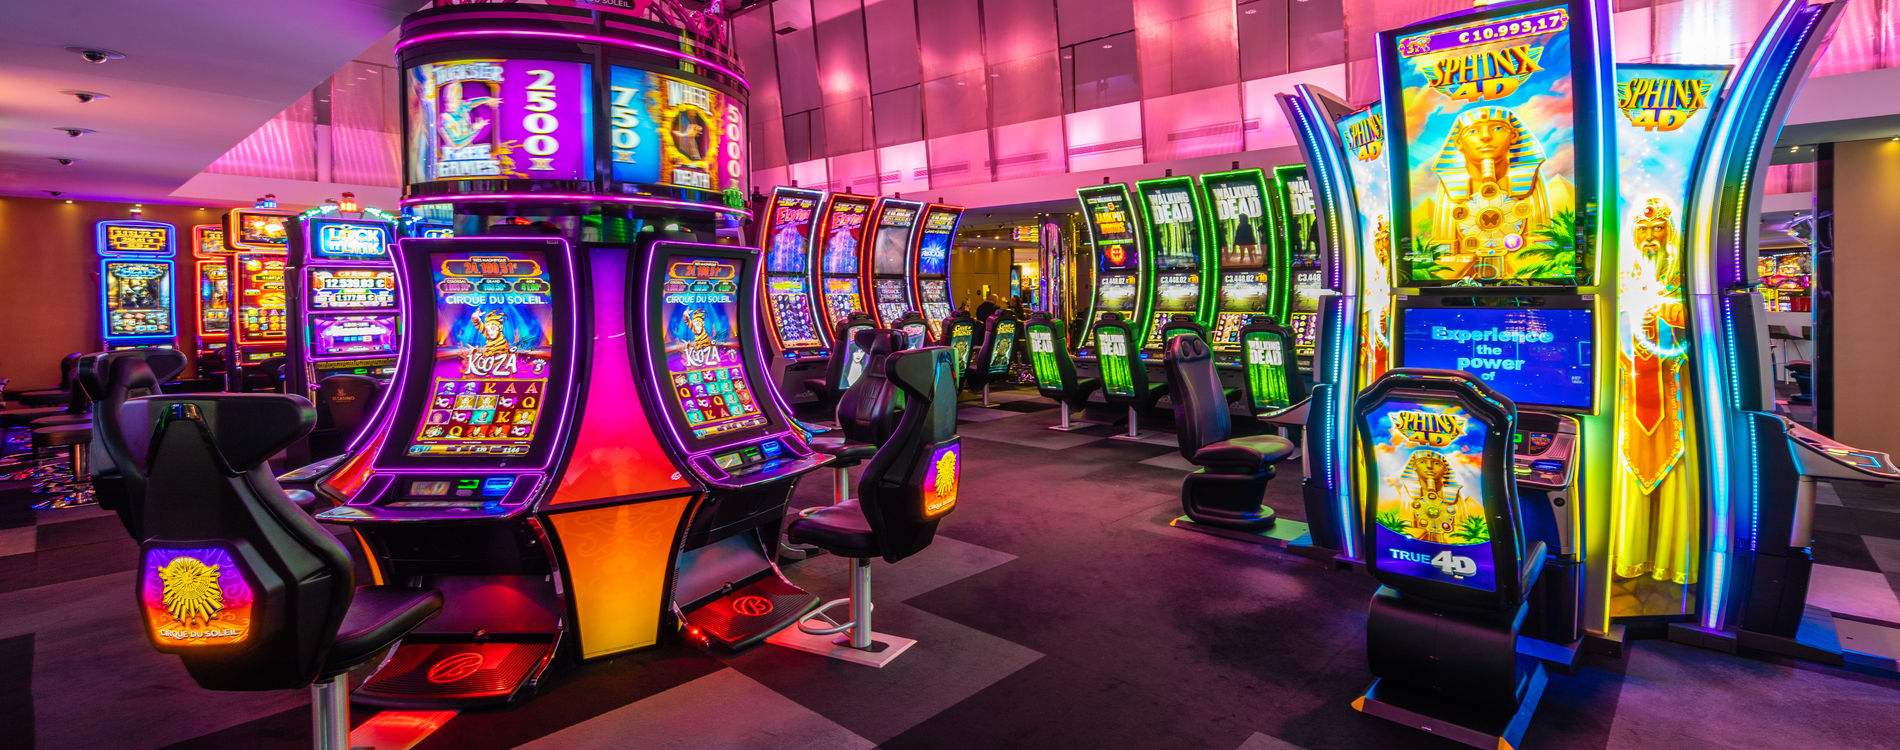 Port Casino Sites: Reviews, Gamble Limitations, and Legal Status